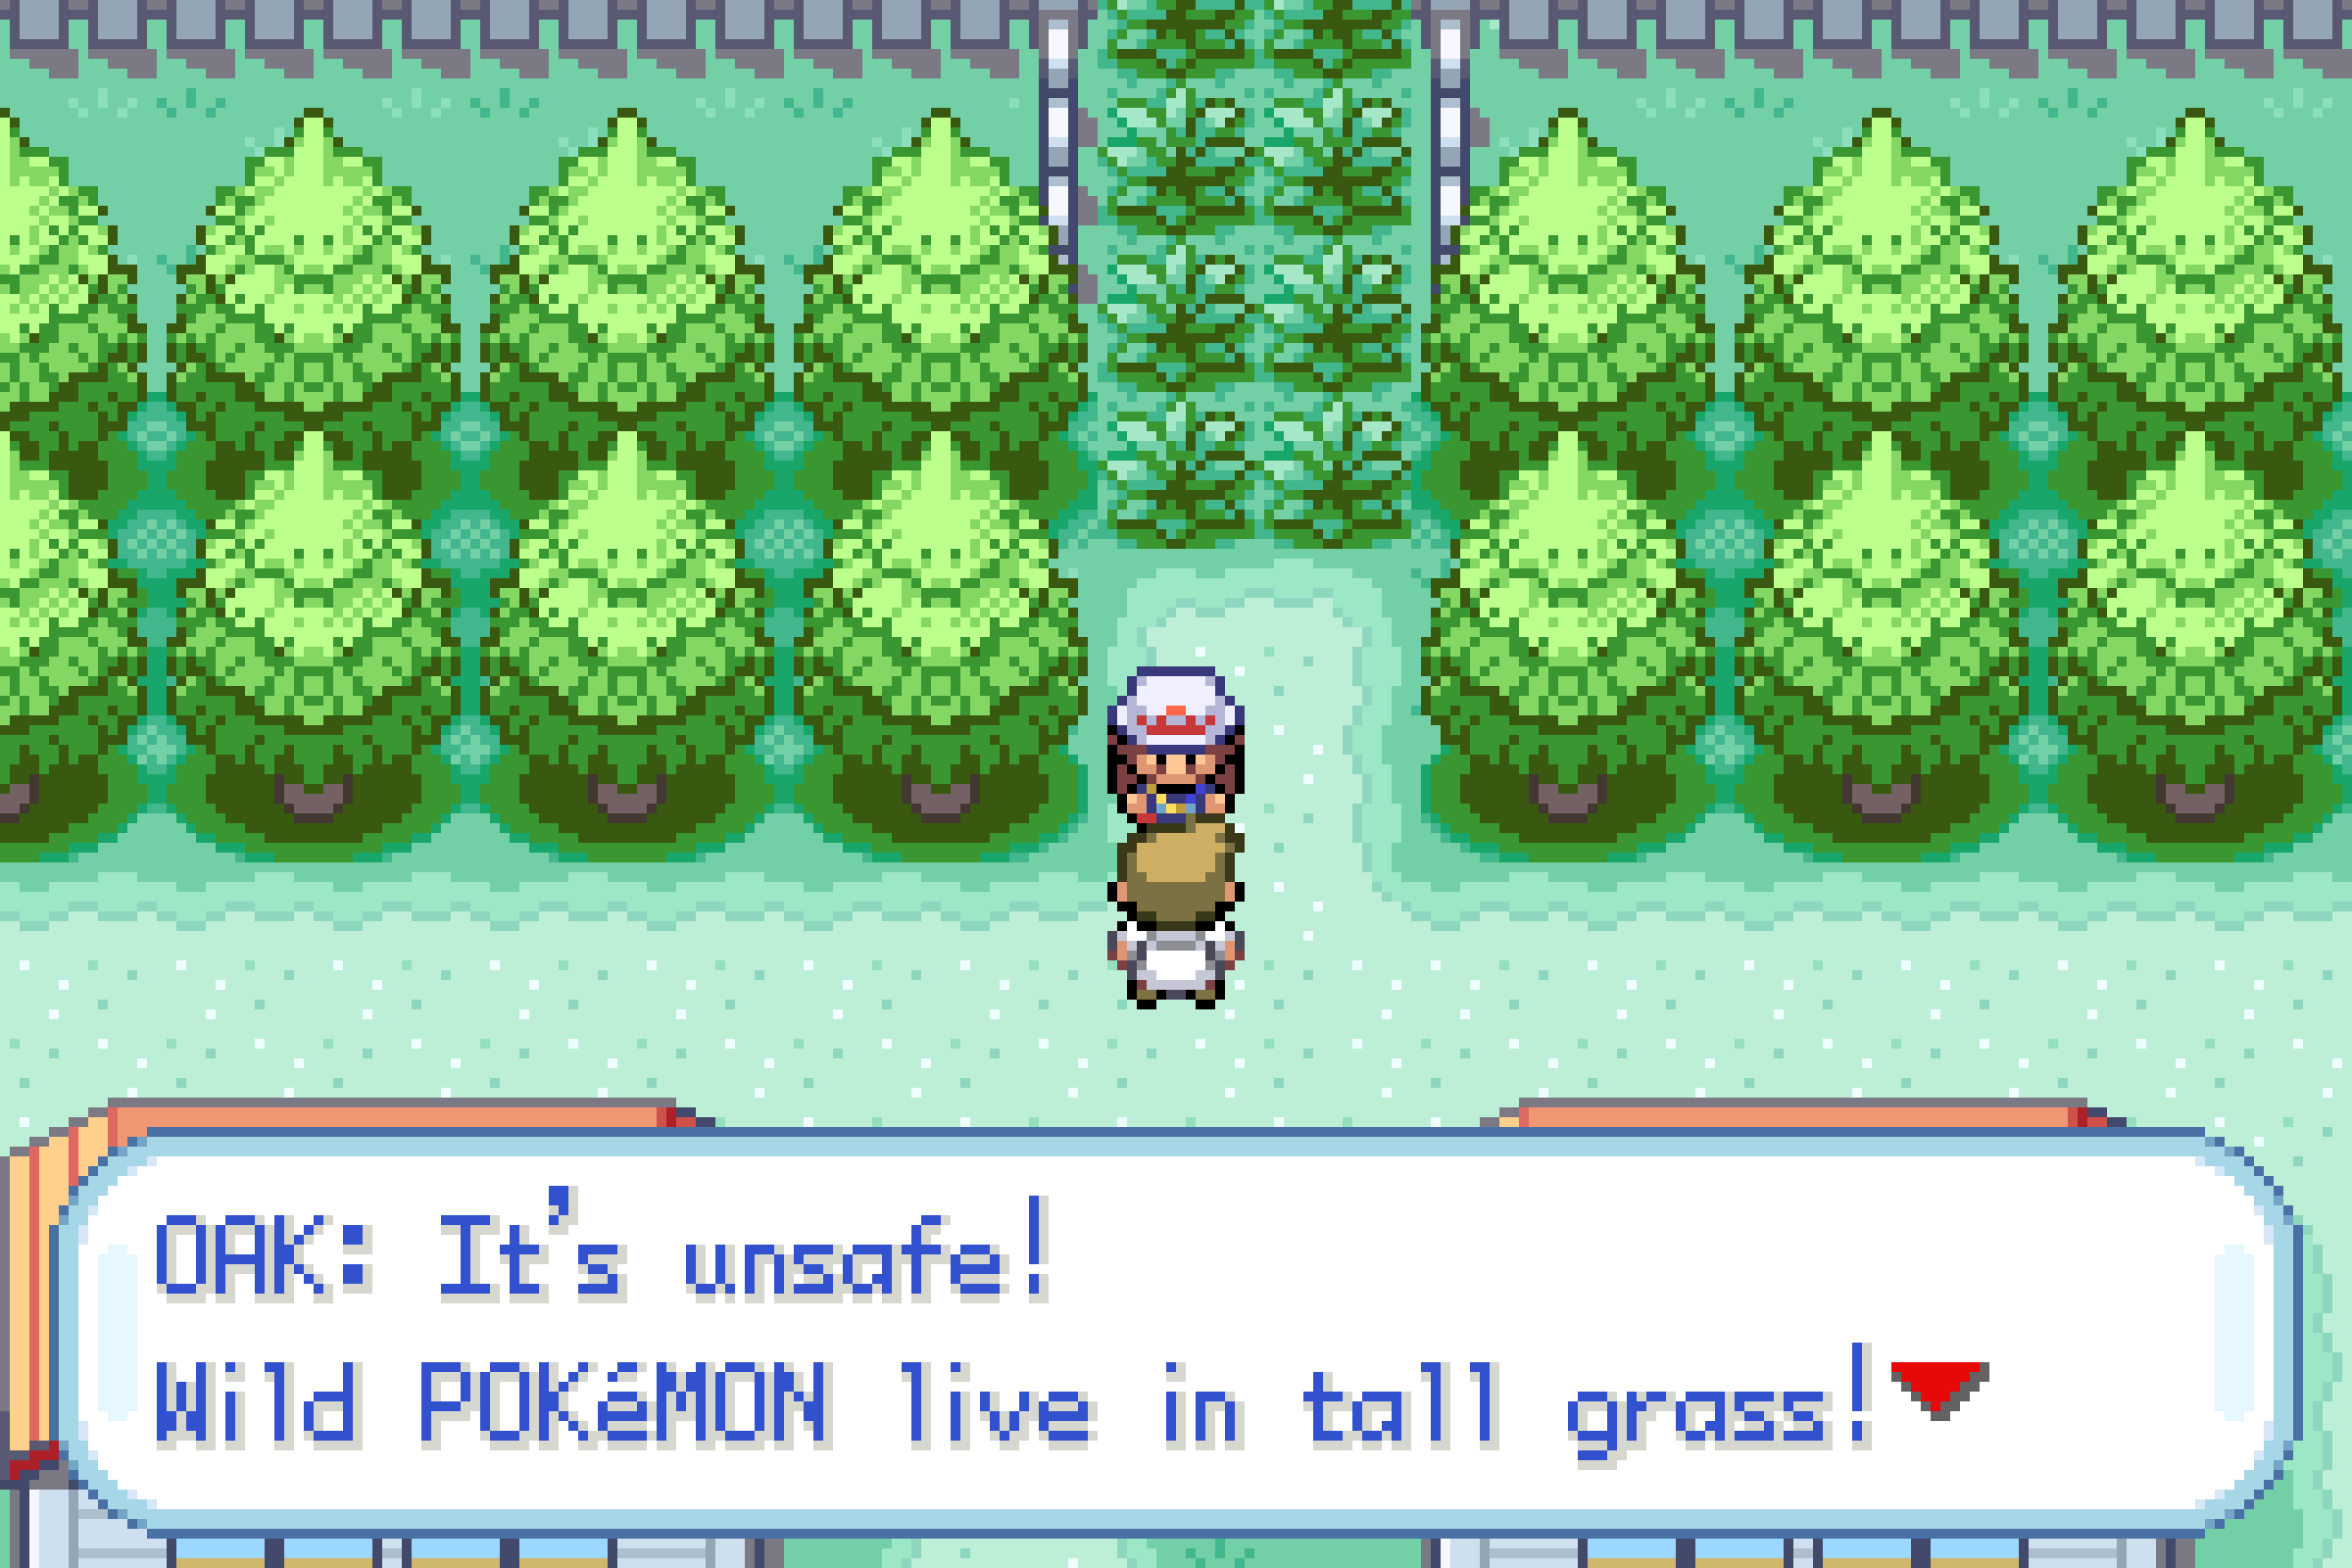 It's unsafe! Wild Pokemon live in tall grass!